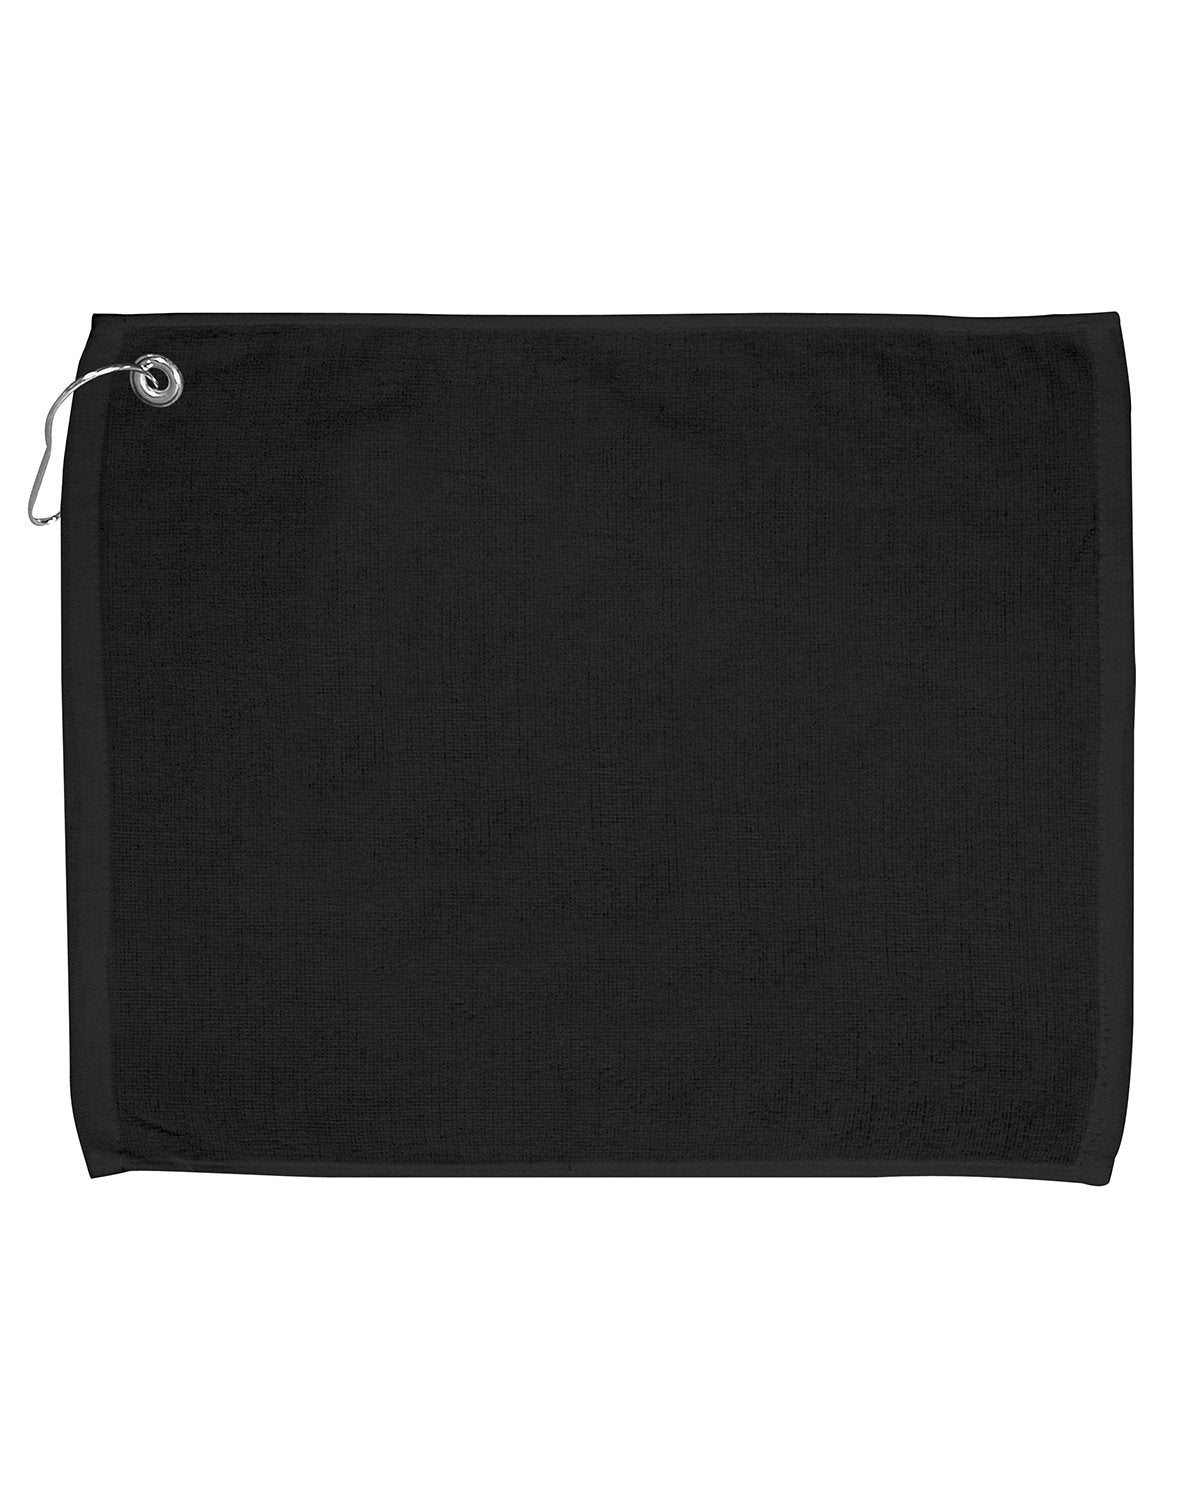 C1625GH-Carmel Towel Company-BLACK-Carmel Towel Company-Bags and Accessories-1